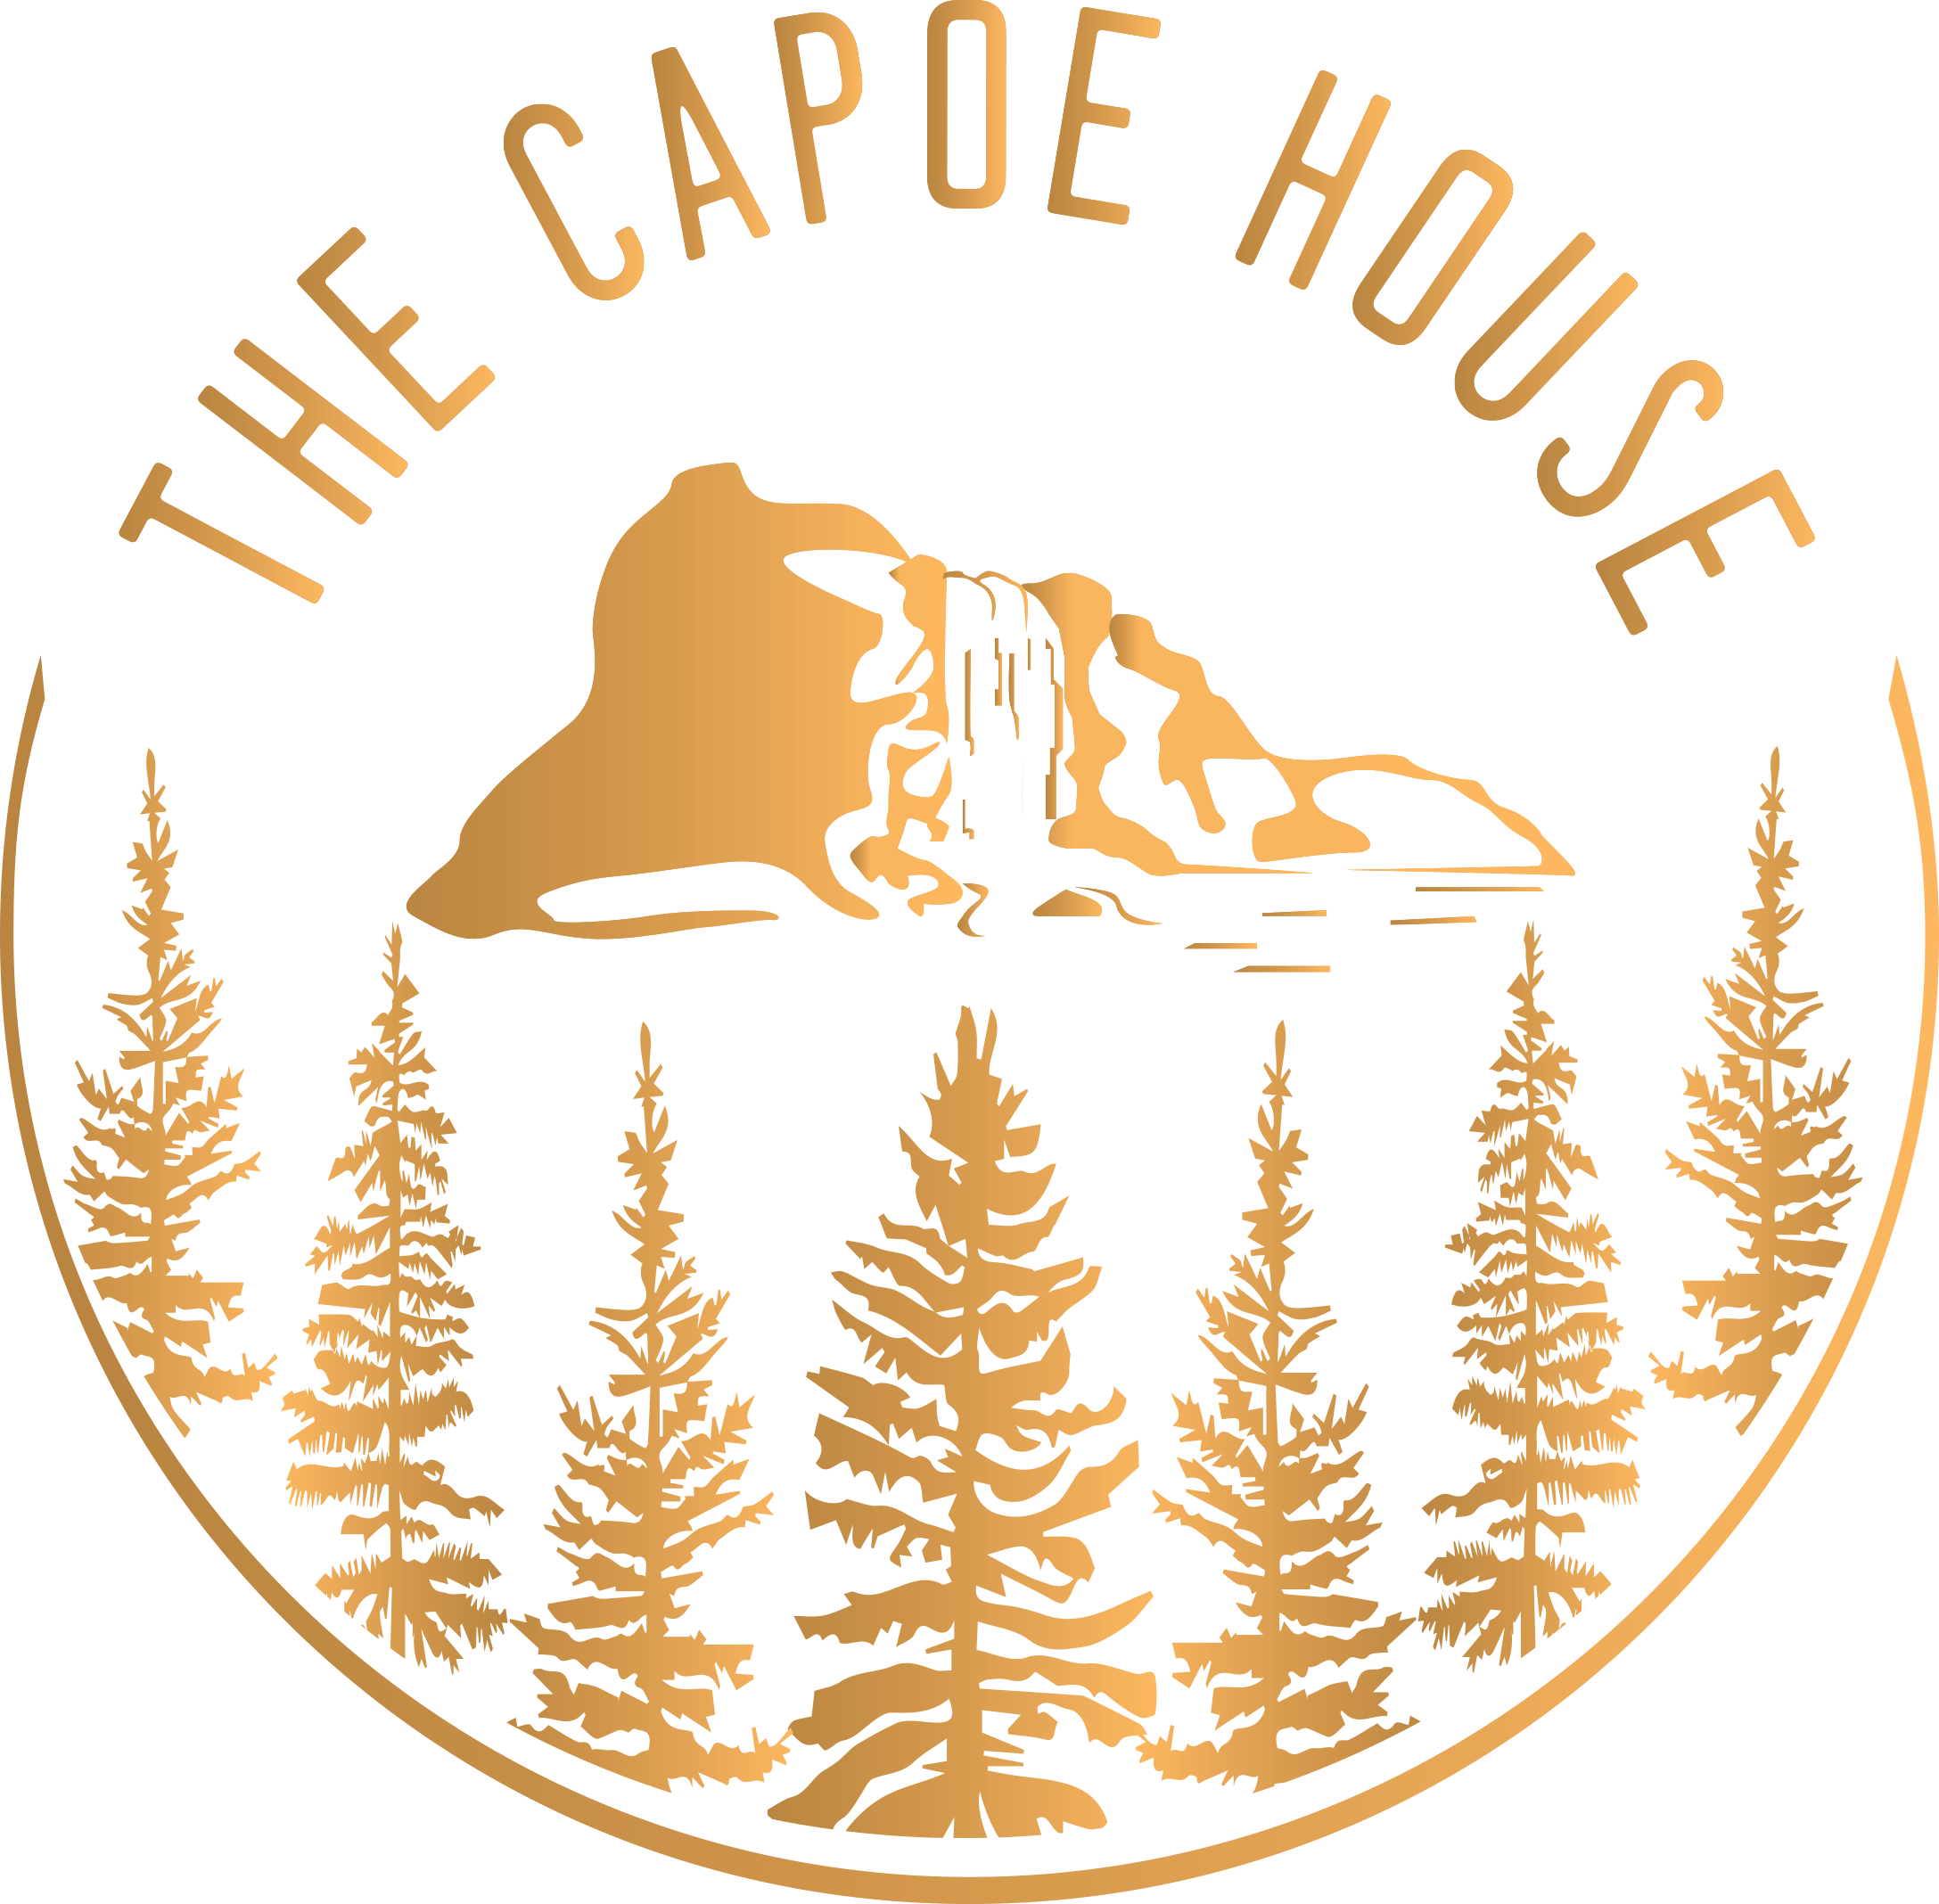 The Capoe House